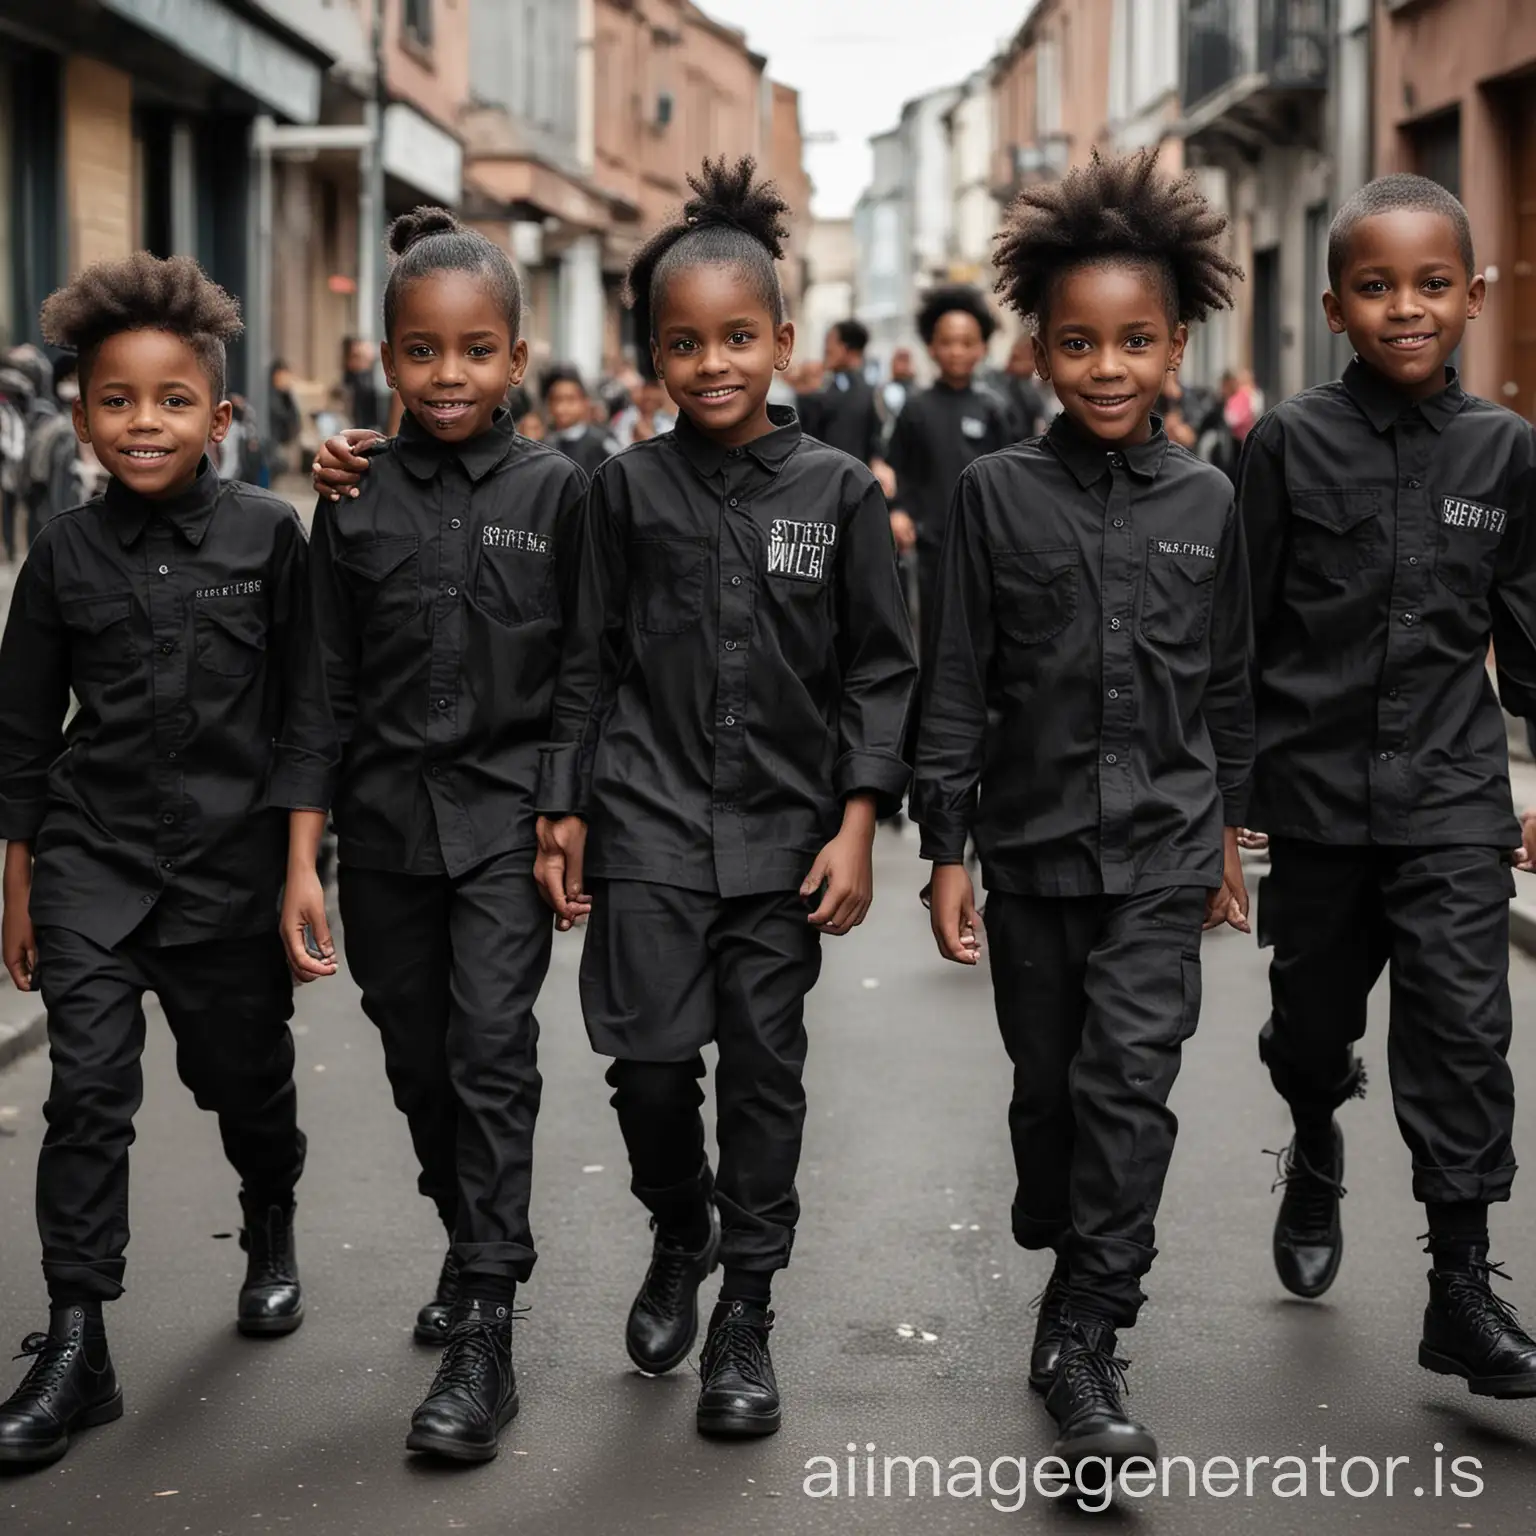 Empowered-Black-Street-Children-Succeeding-in-Various-Endeavors